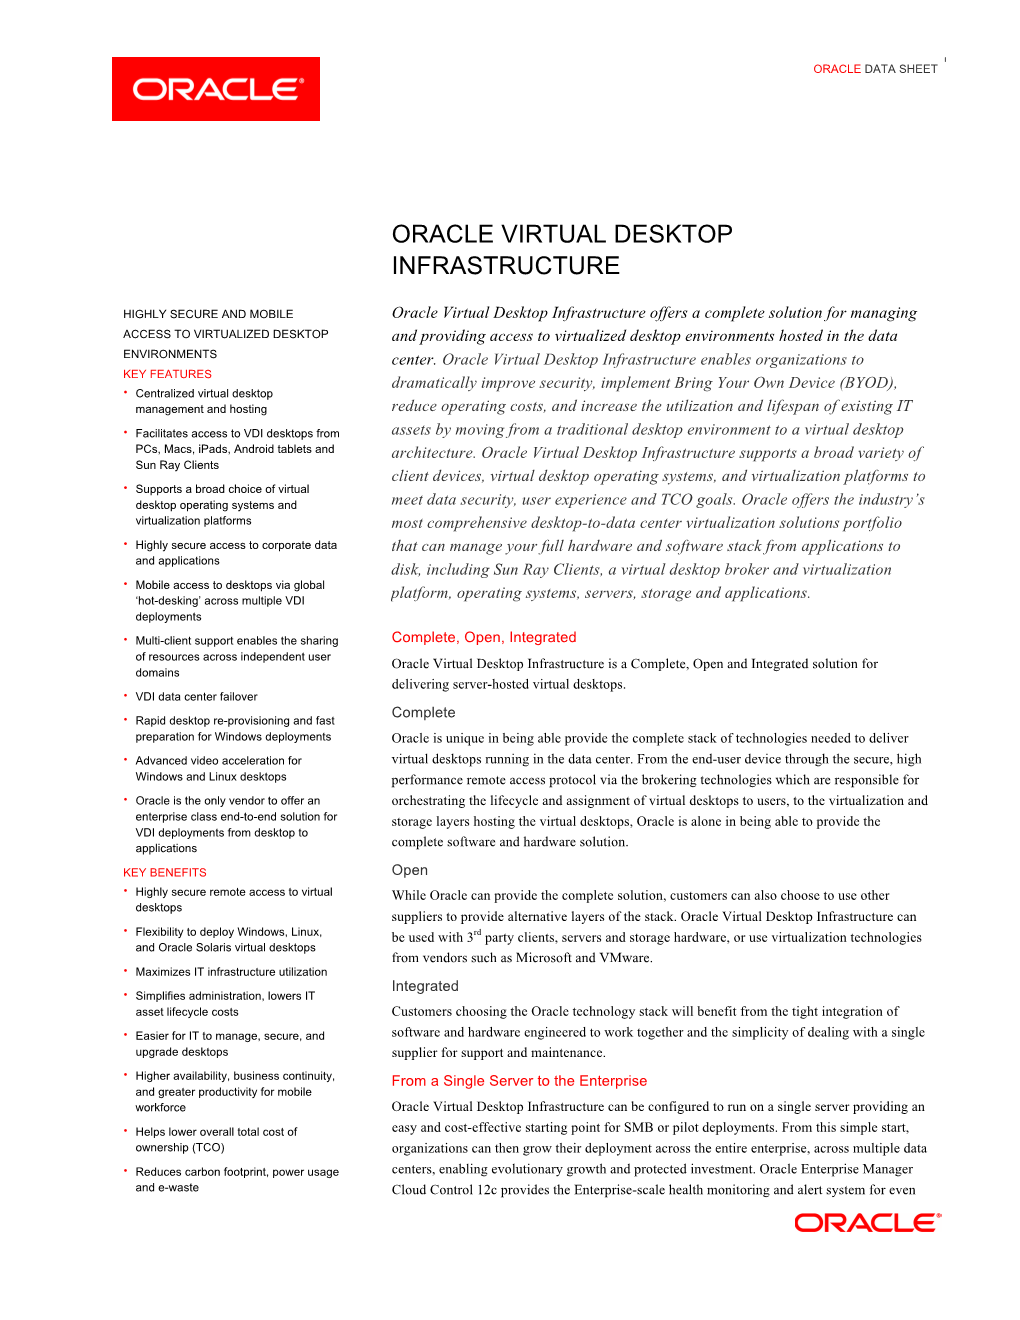 Oracle Virtual Desktop Infrastructure Data Sheet